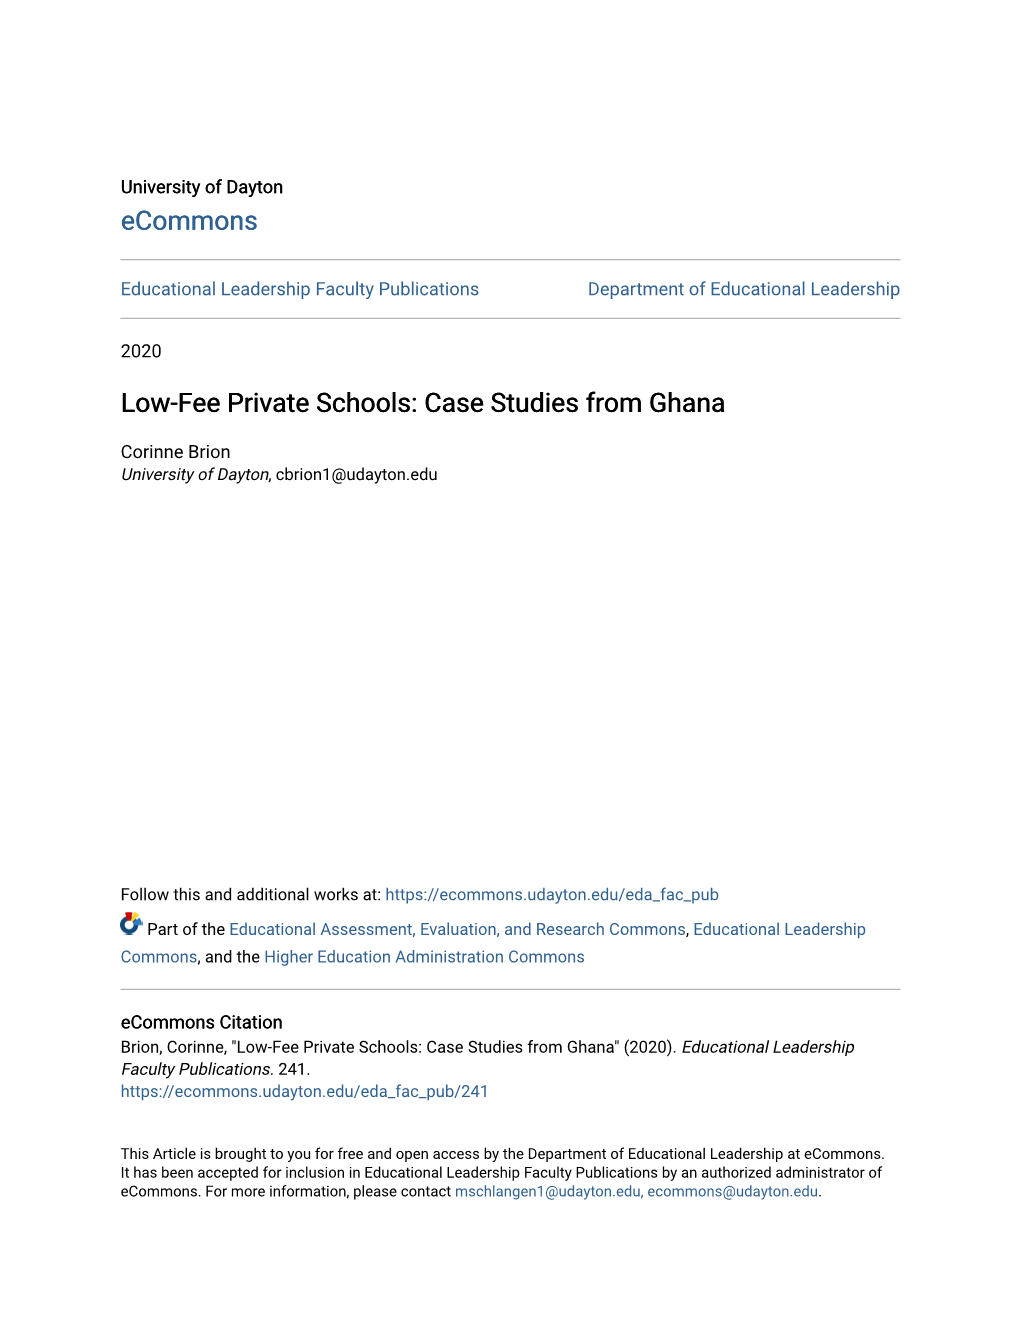 Low-Fee Private Schools: Case Studies from Ghana